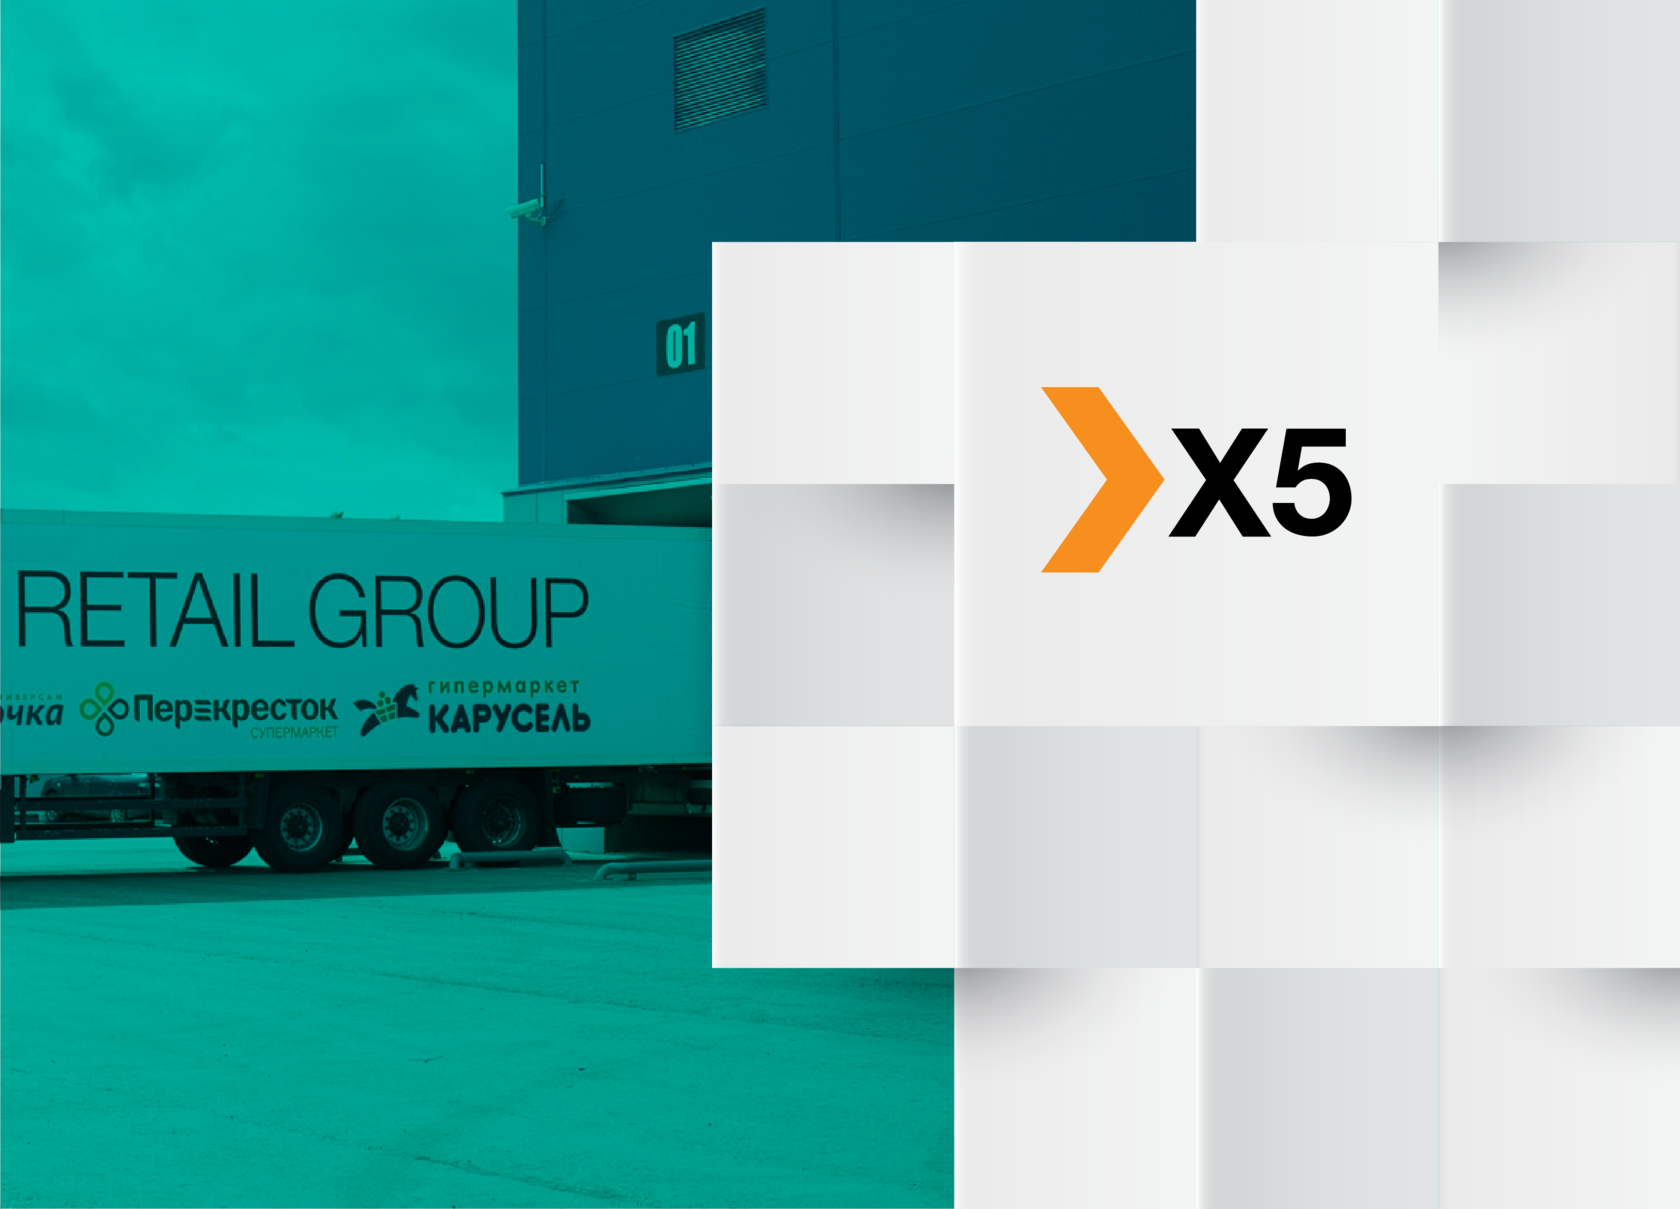 Х5 ретейл групп логотип. Группа x5 Retail Group. Х5 Ритейл групп компании. X5 Retail Group x,. Компания 5 сайт